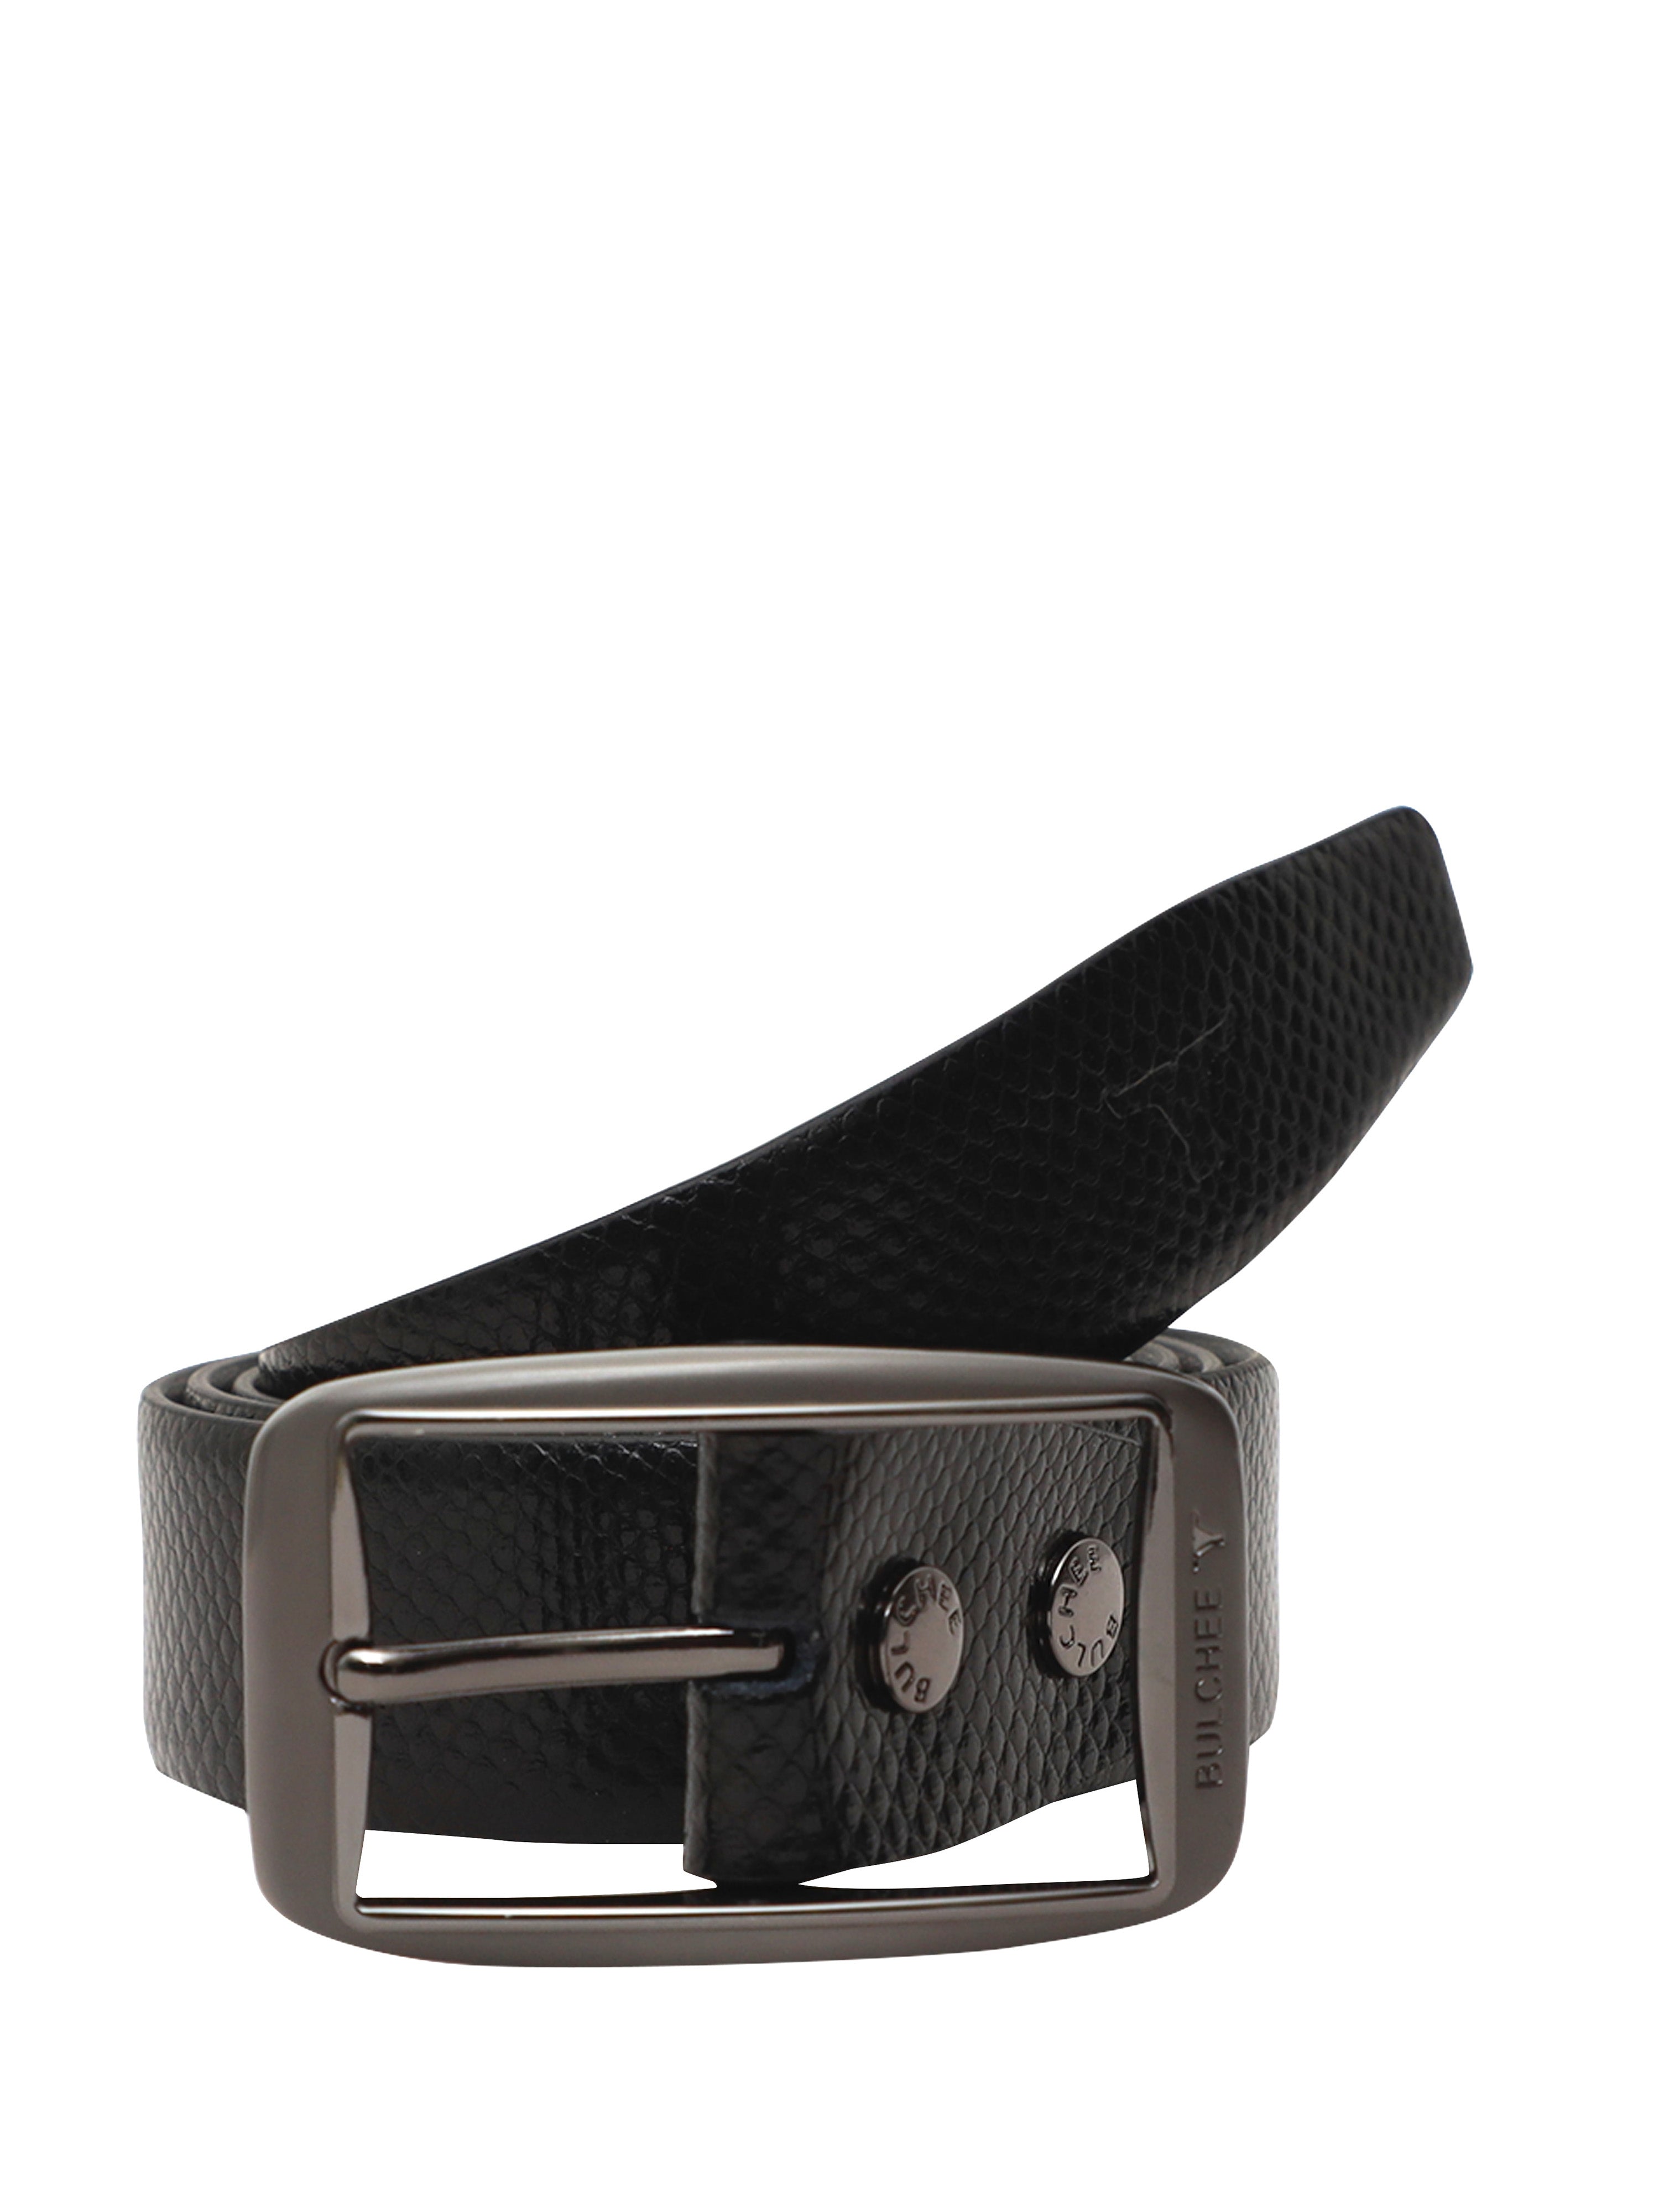 Bulchee Premium Collections Men's Genuine Leather Belt | Padded Chino | Black | BUL2140B